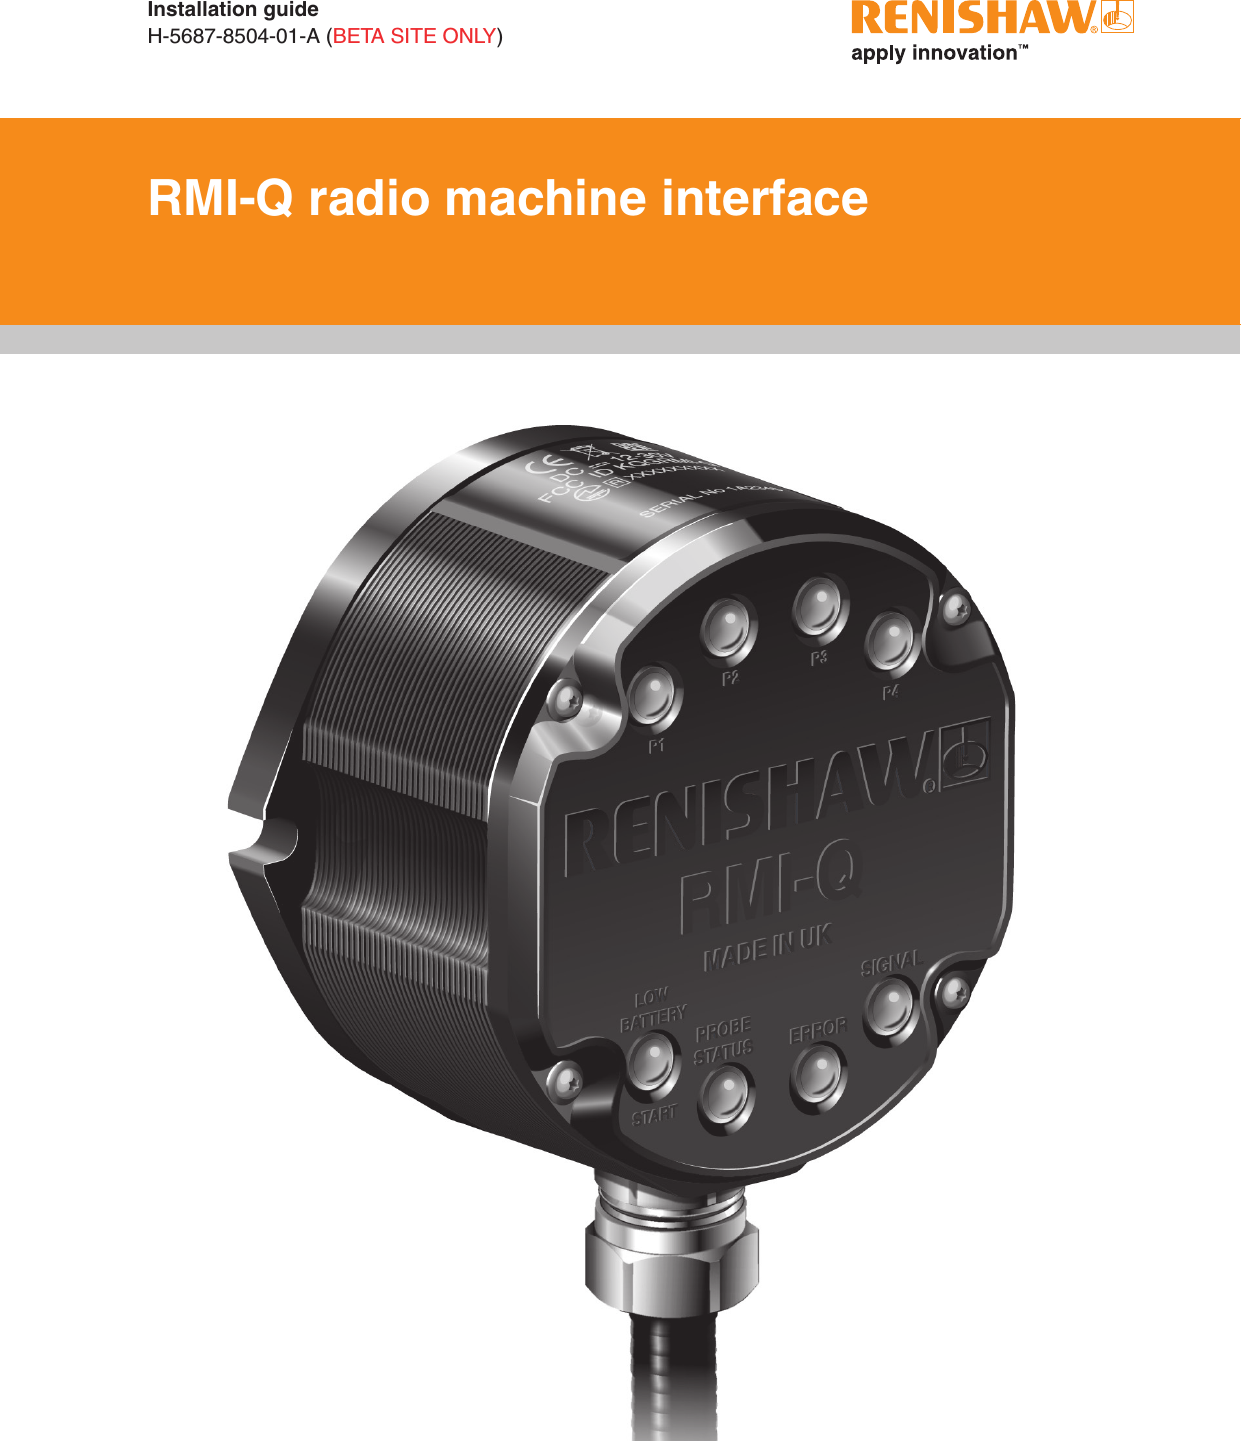 RMI-Q radio machine interfaceInstallation guideH-5687-8504-01-A (BETA SITE ONLY)